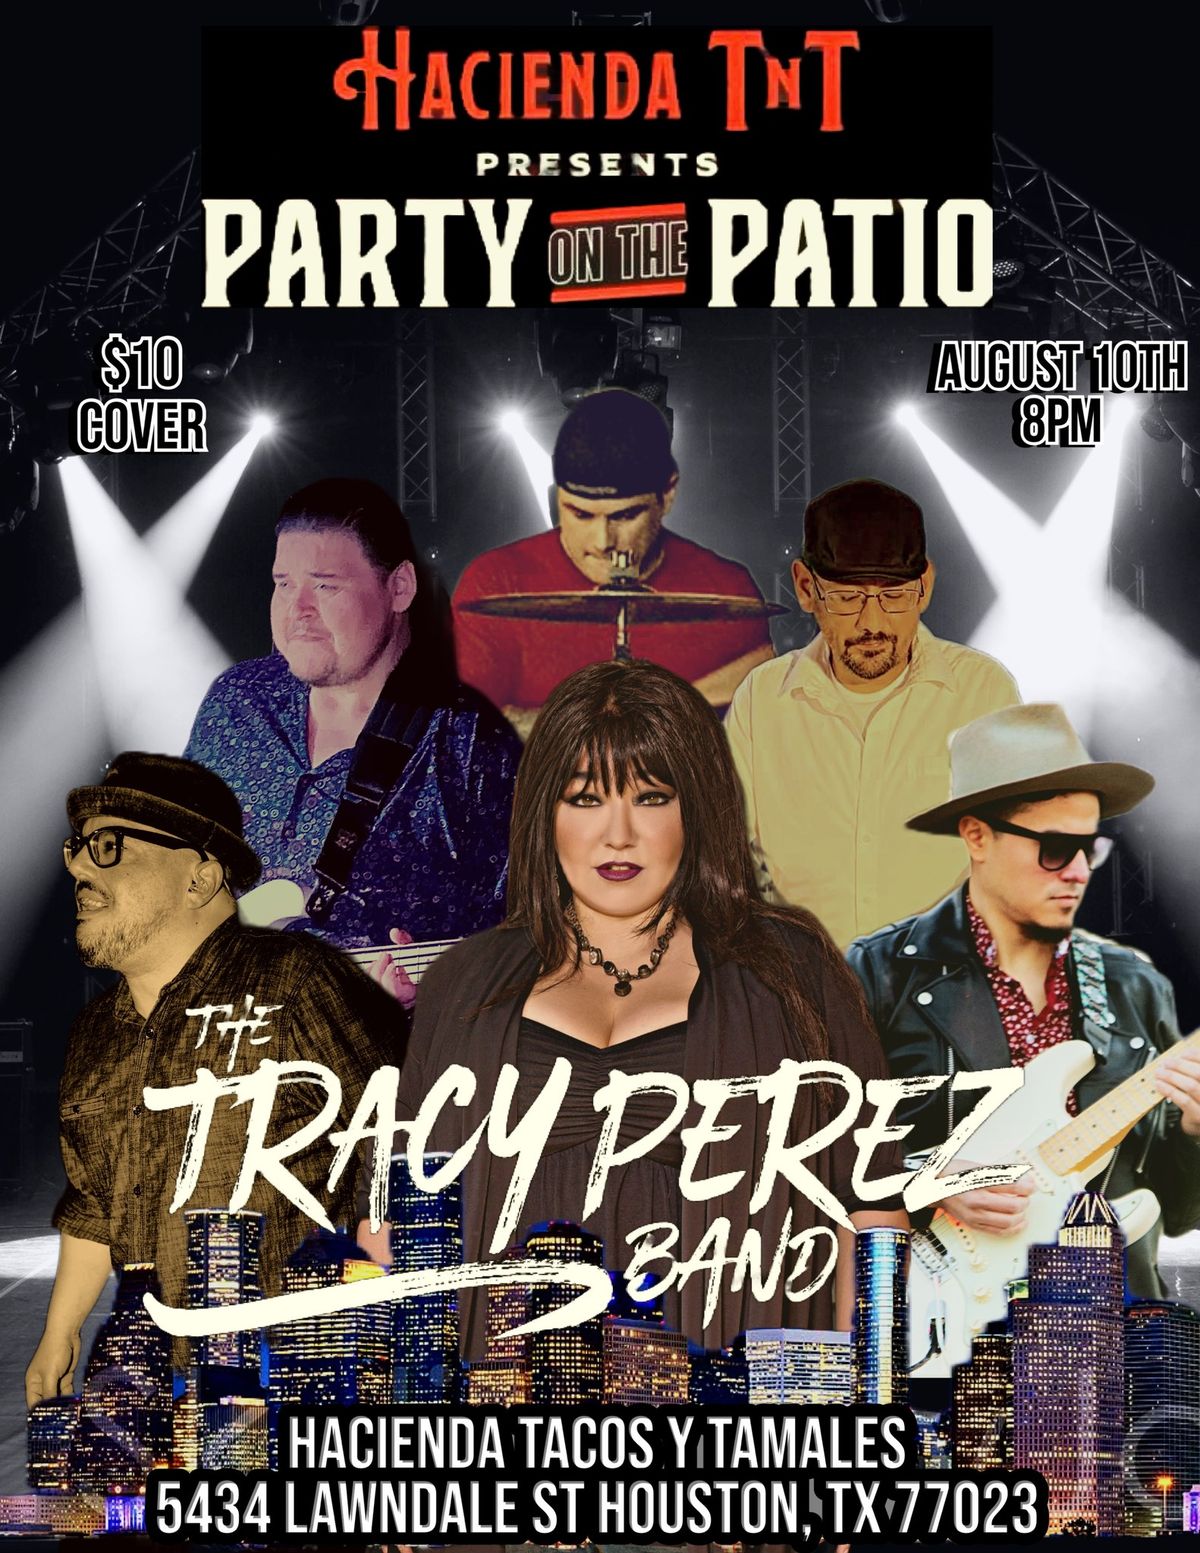 Tracy Perez Band @ Hacienda TnT!